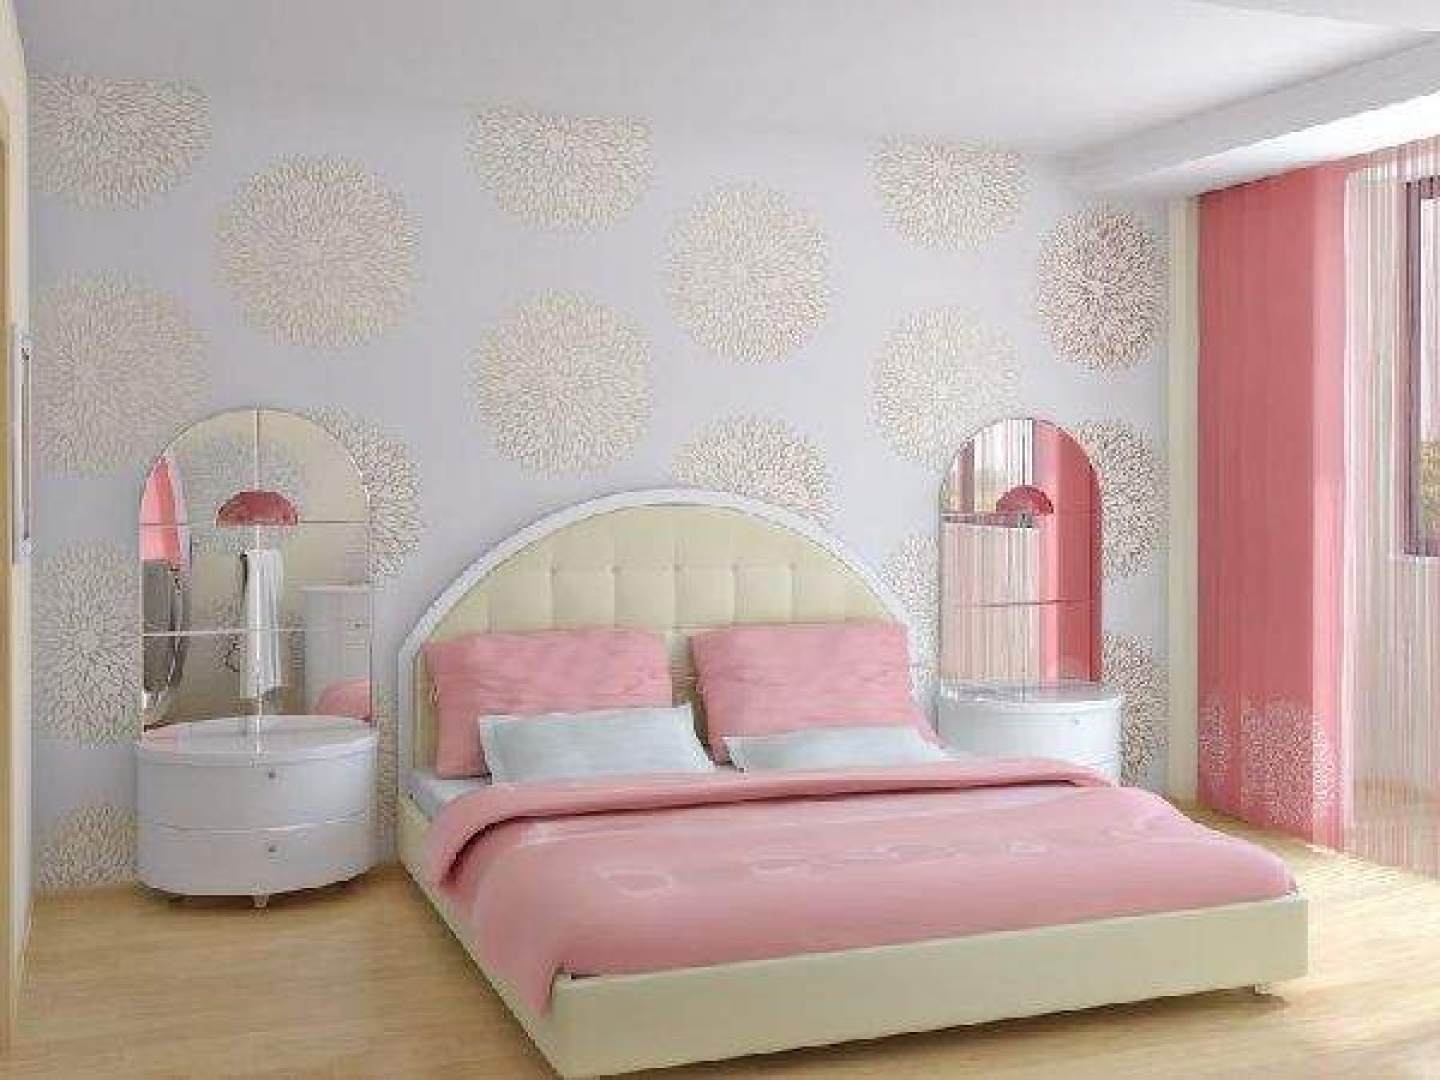  bedroom design for housescool bedroom wallpaper ideas at minimalist